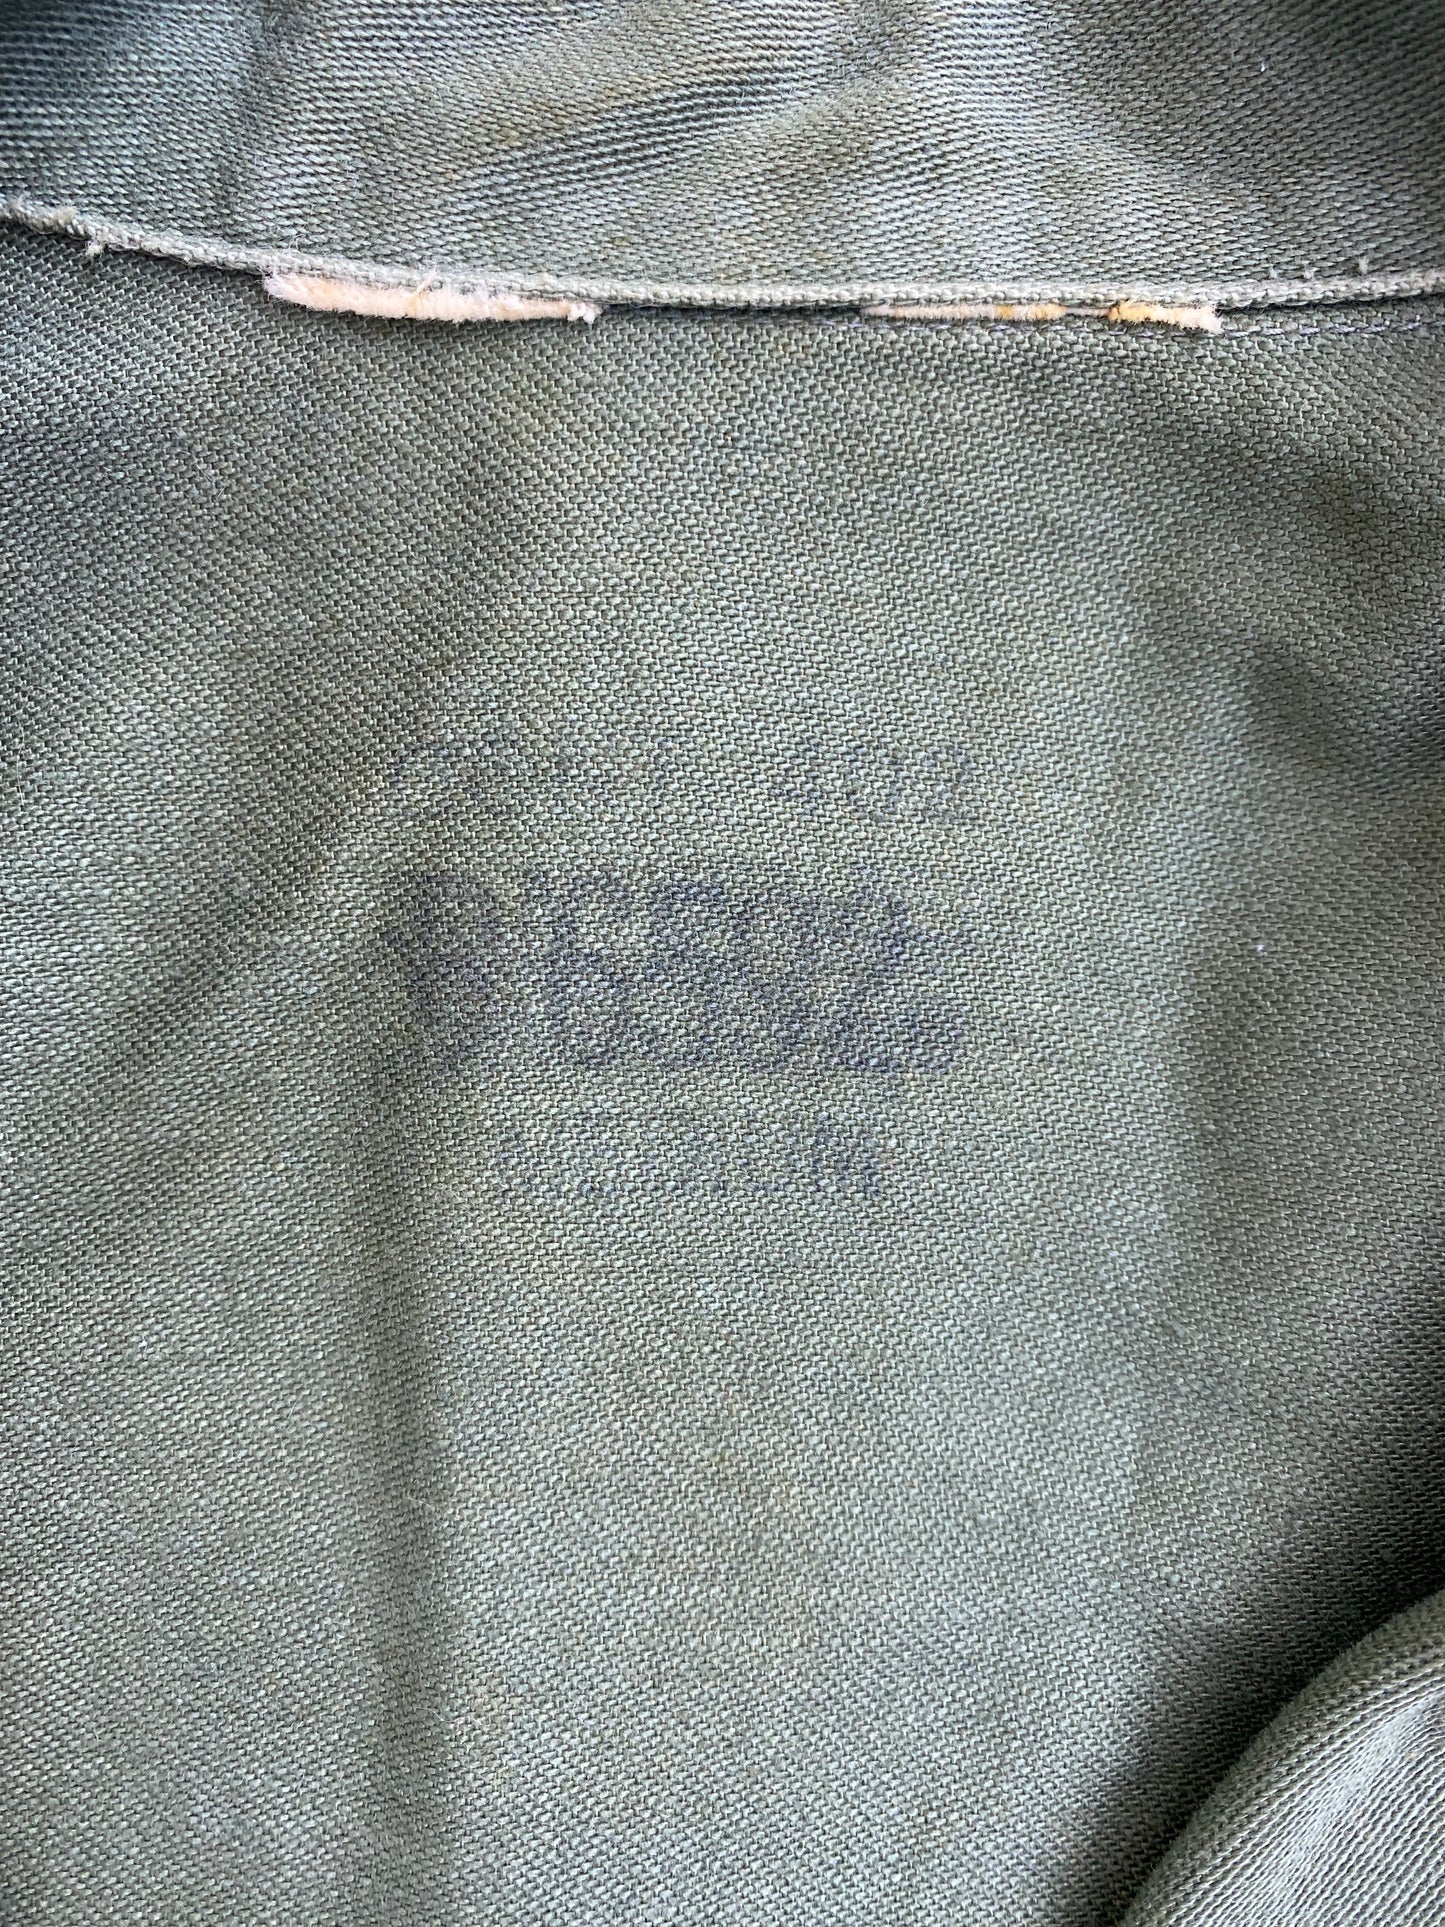 1950 BSA Green Jacket